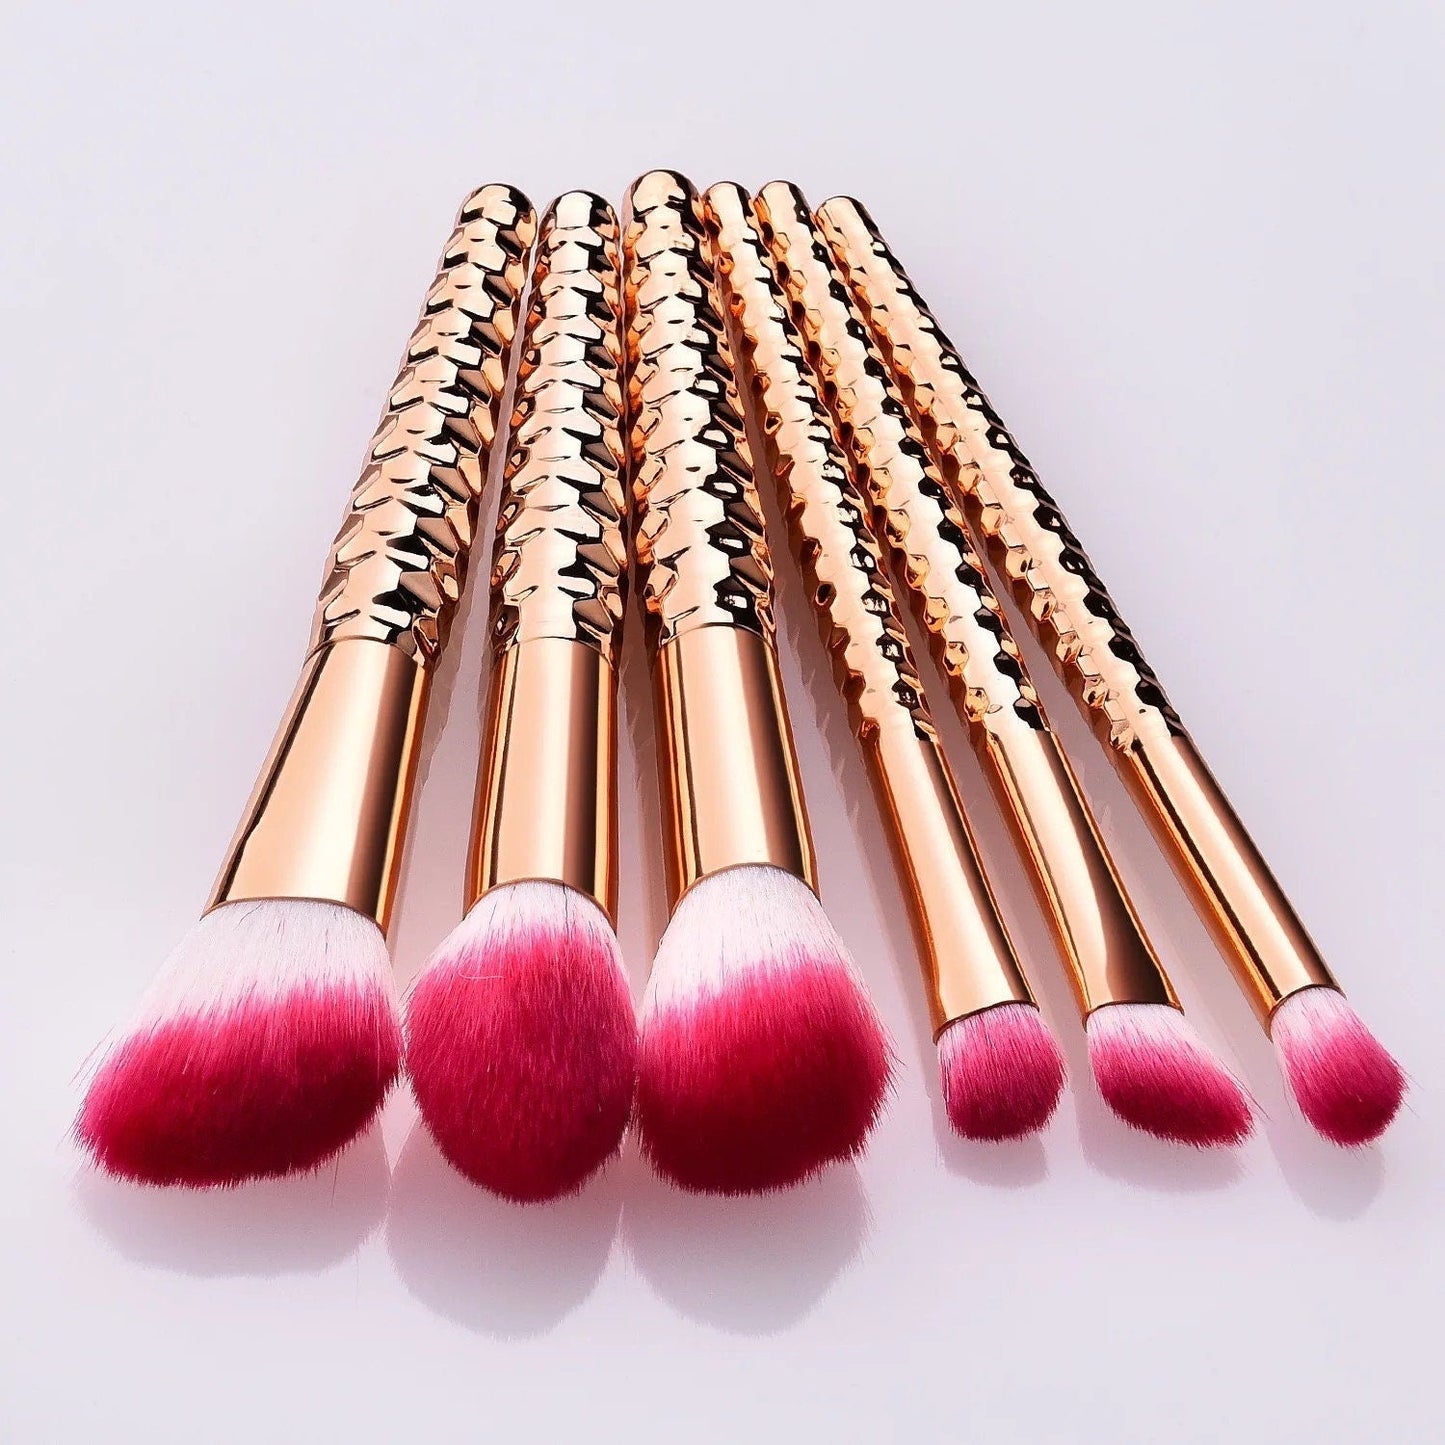 Kaleidoscopic Chiseled Makeup Brush Set Makeup Brushes Pink Sweetheart